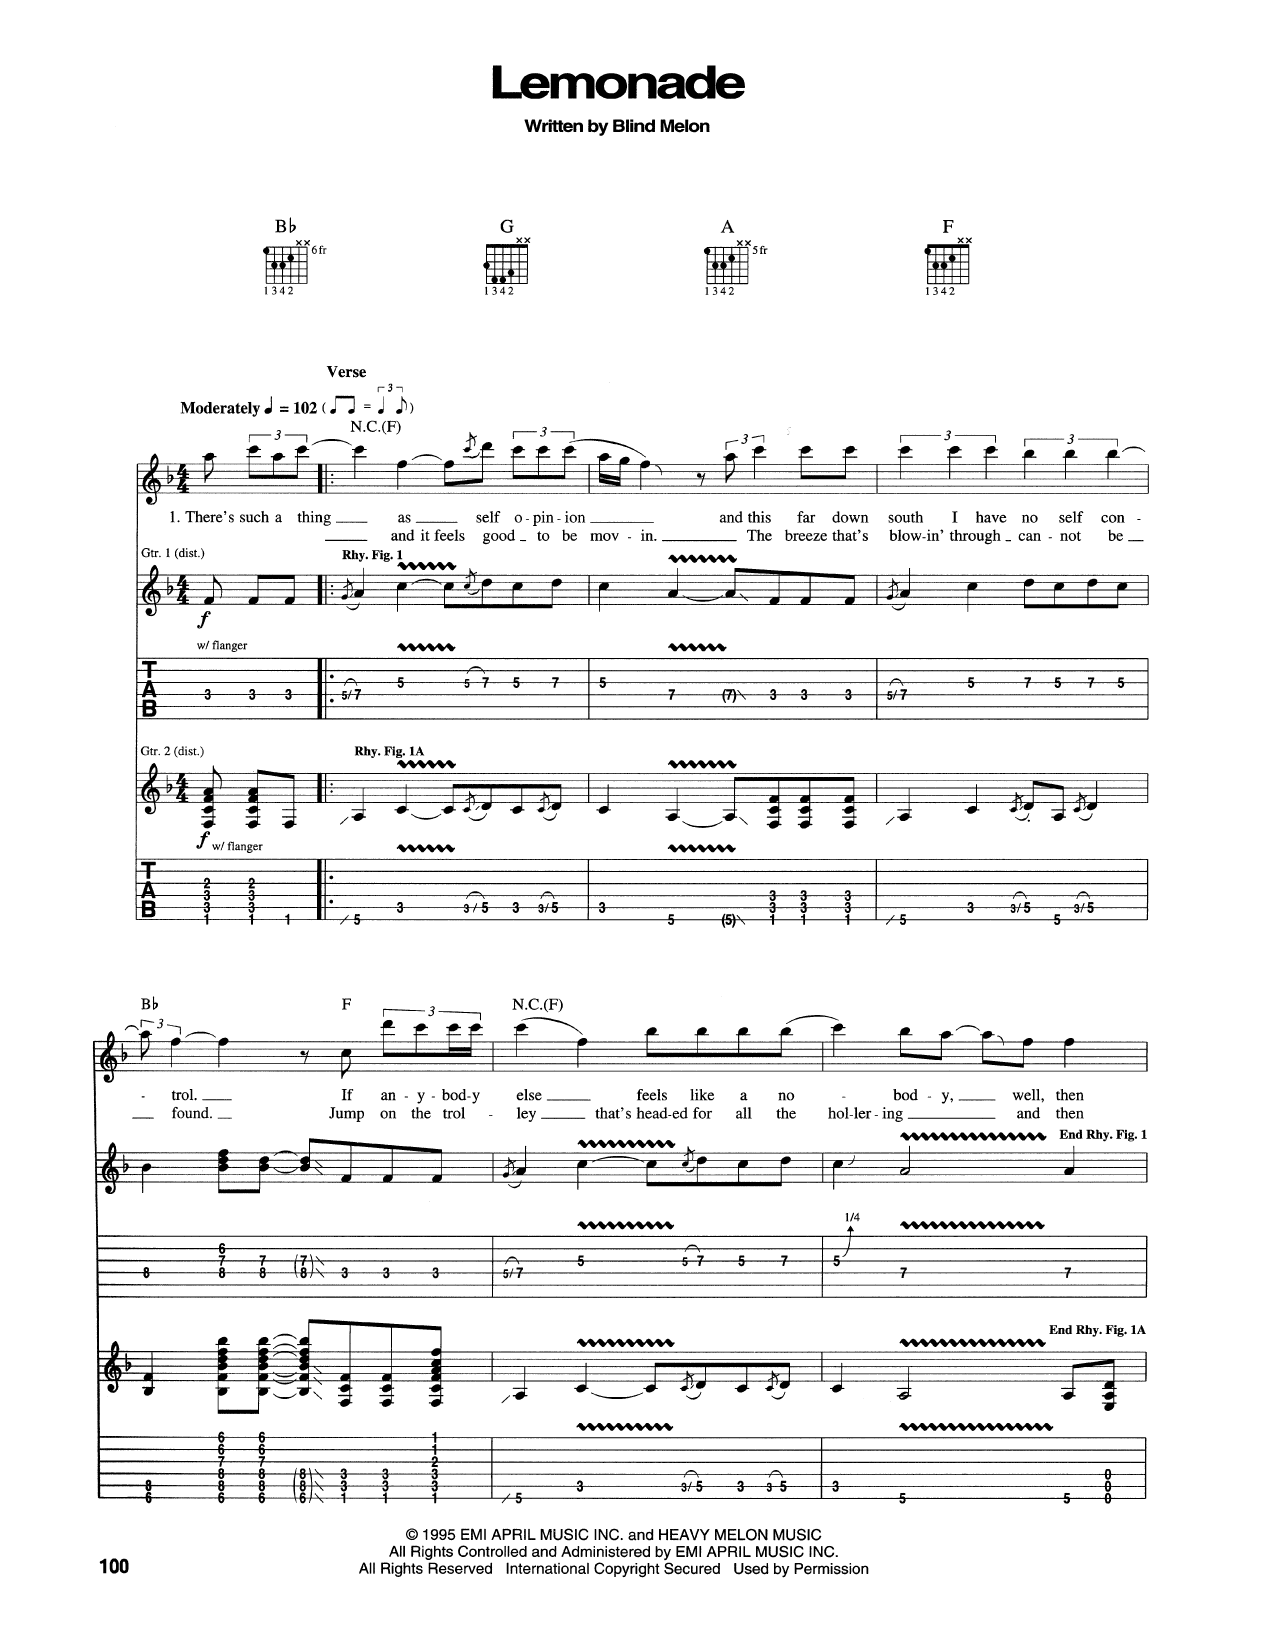 Blind Melon Lemonade Sheet Music Notes & Chords for Guitar Tab - Download or Print PDF